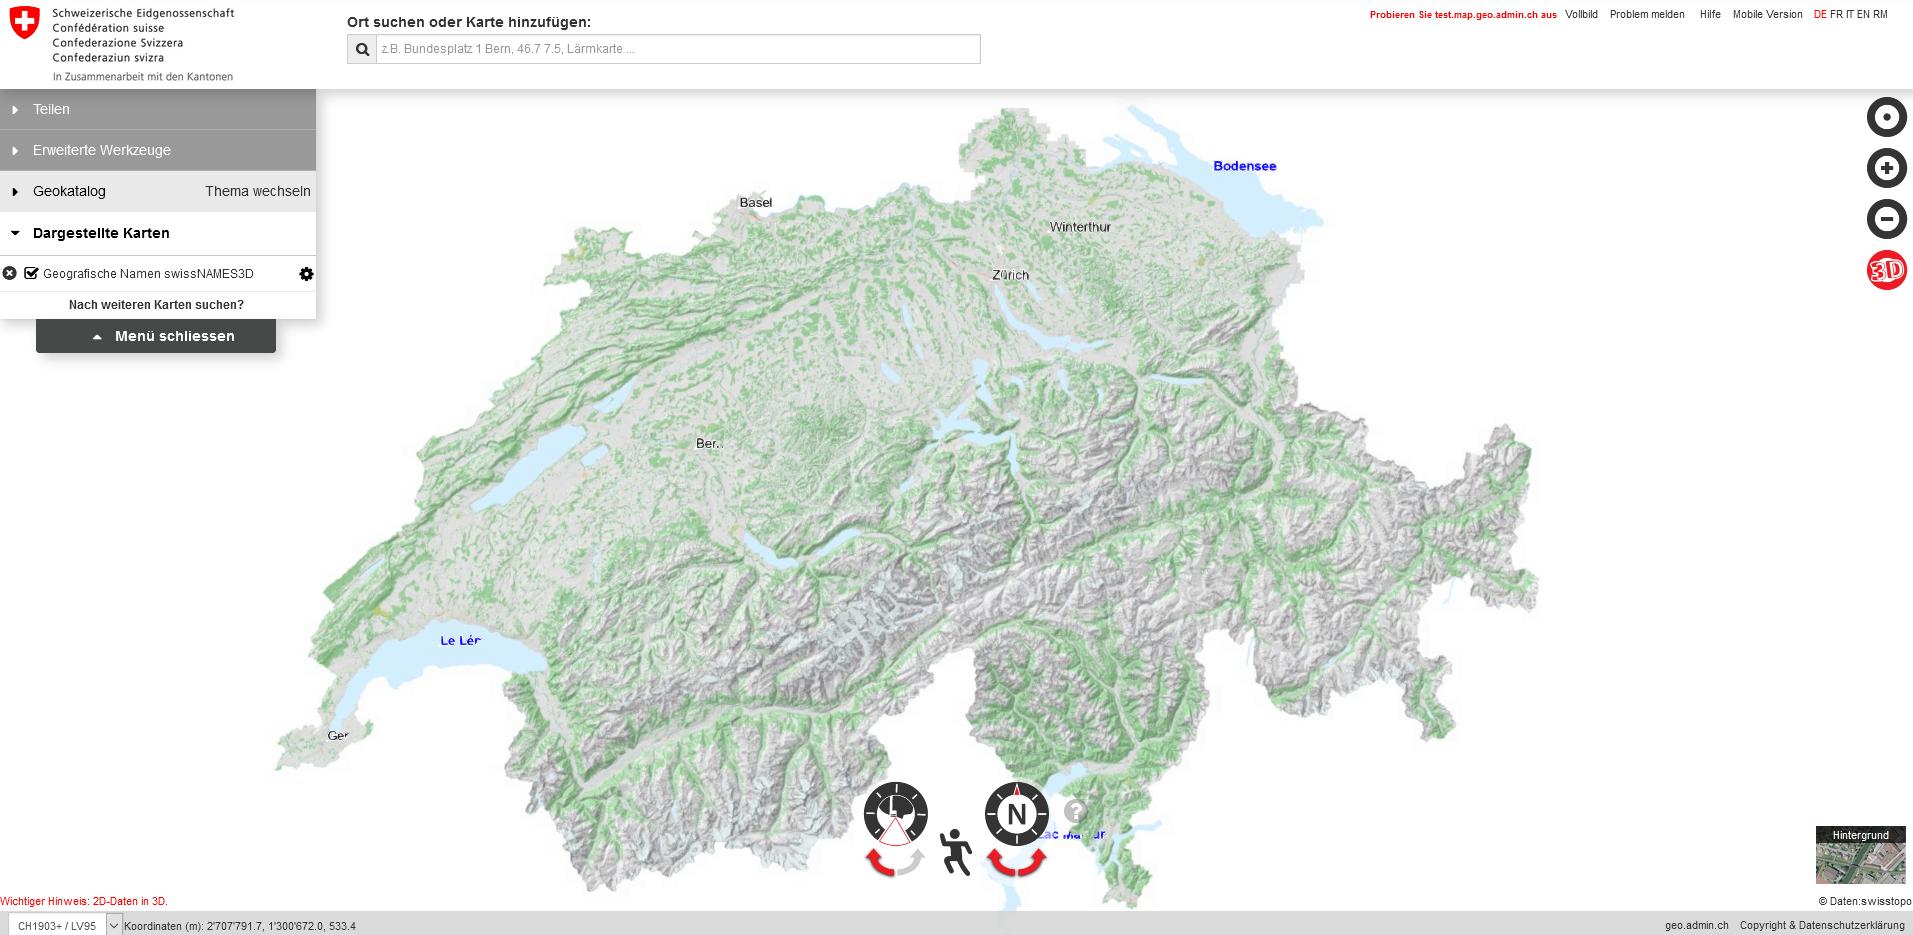 Digitale Swisstopo-Geodaten kostenlos nutzbar